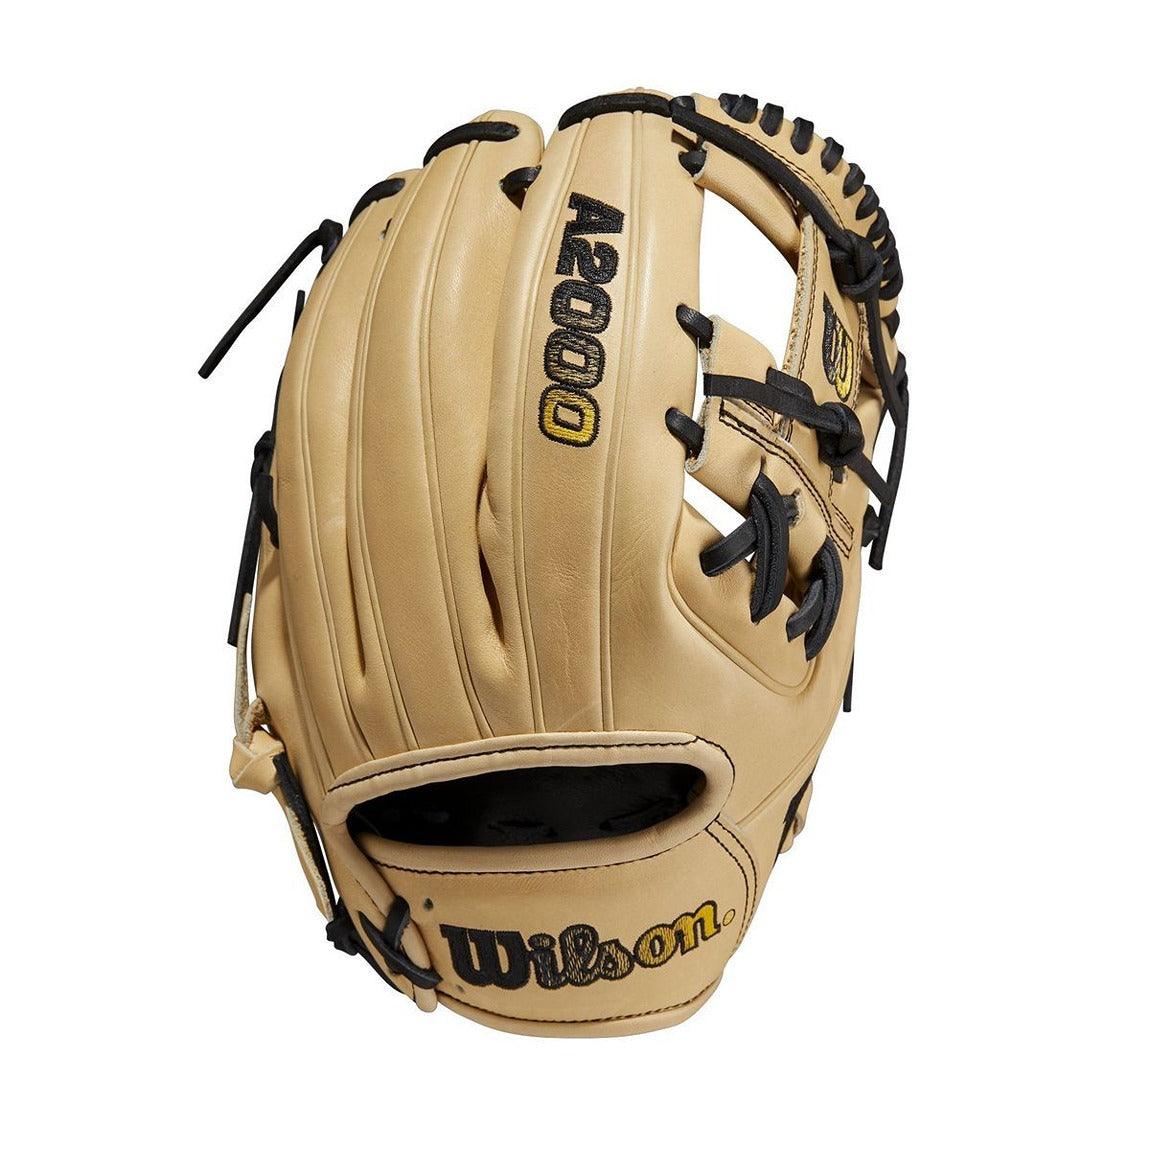 A2000 11.5" Baseball Glove - Sports Excellence